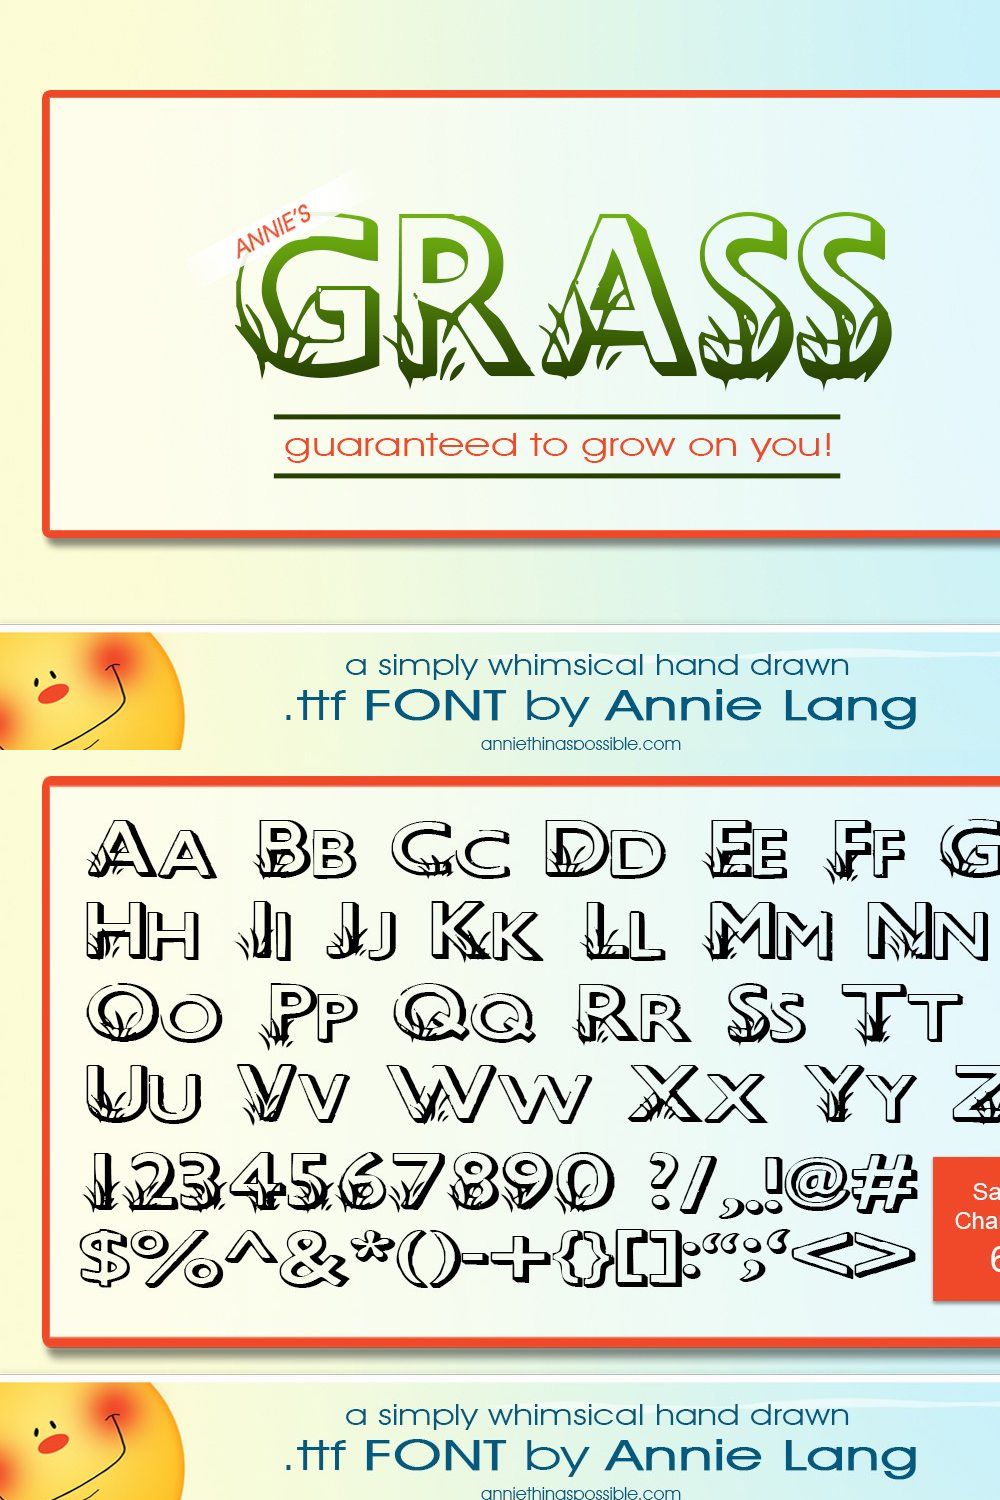 Annie's Grass Font pinterest preview image.